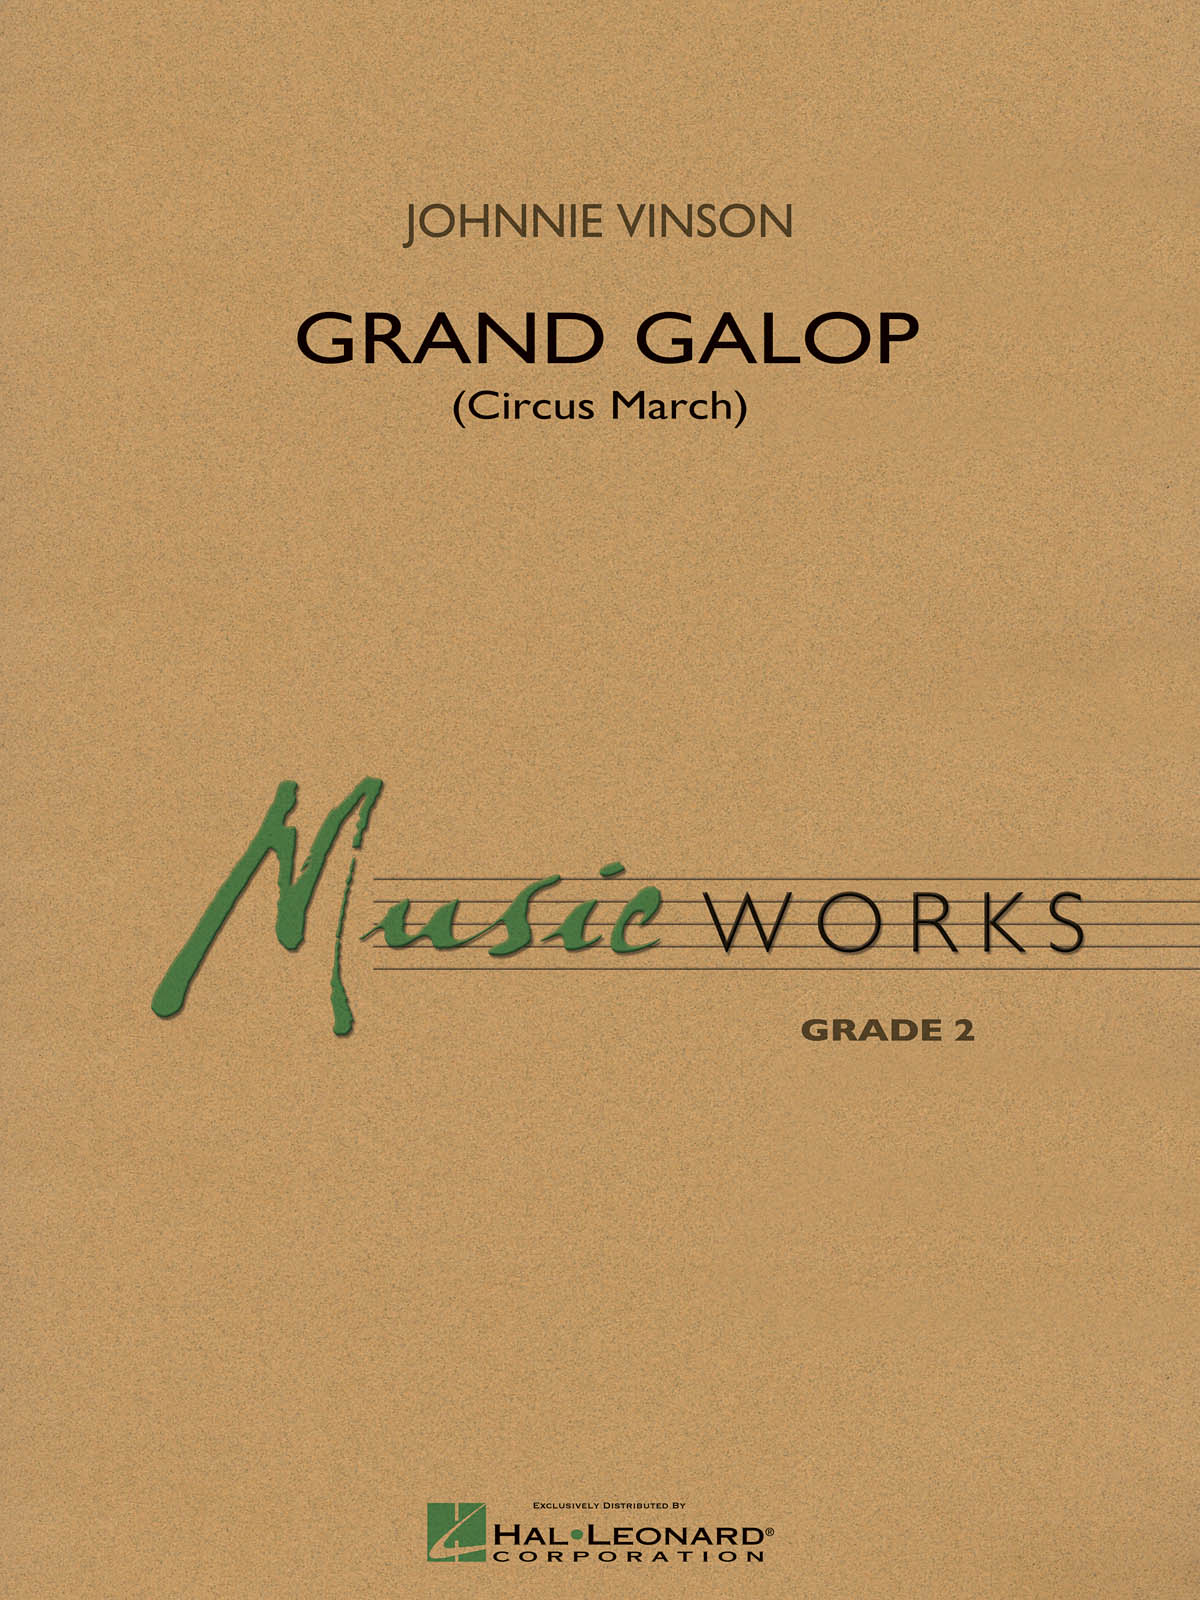 Johnnie Vinson: Grand Galop  (Circus March): Concert Band: Score